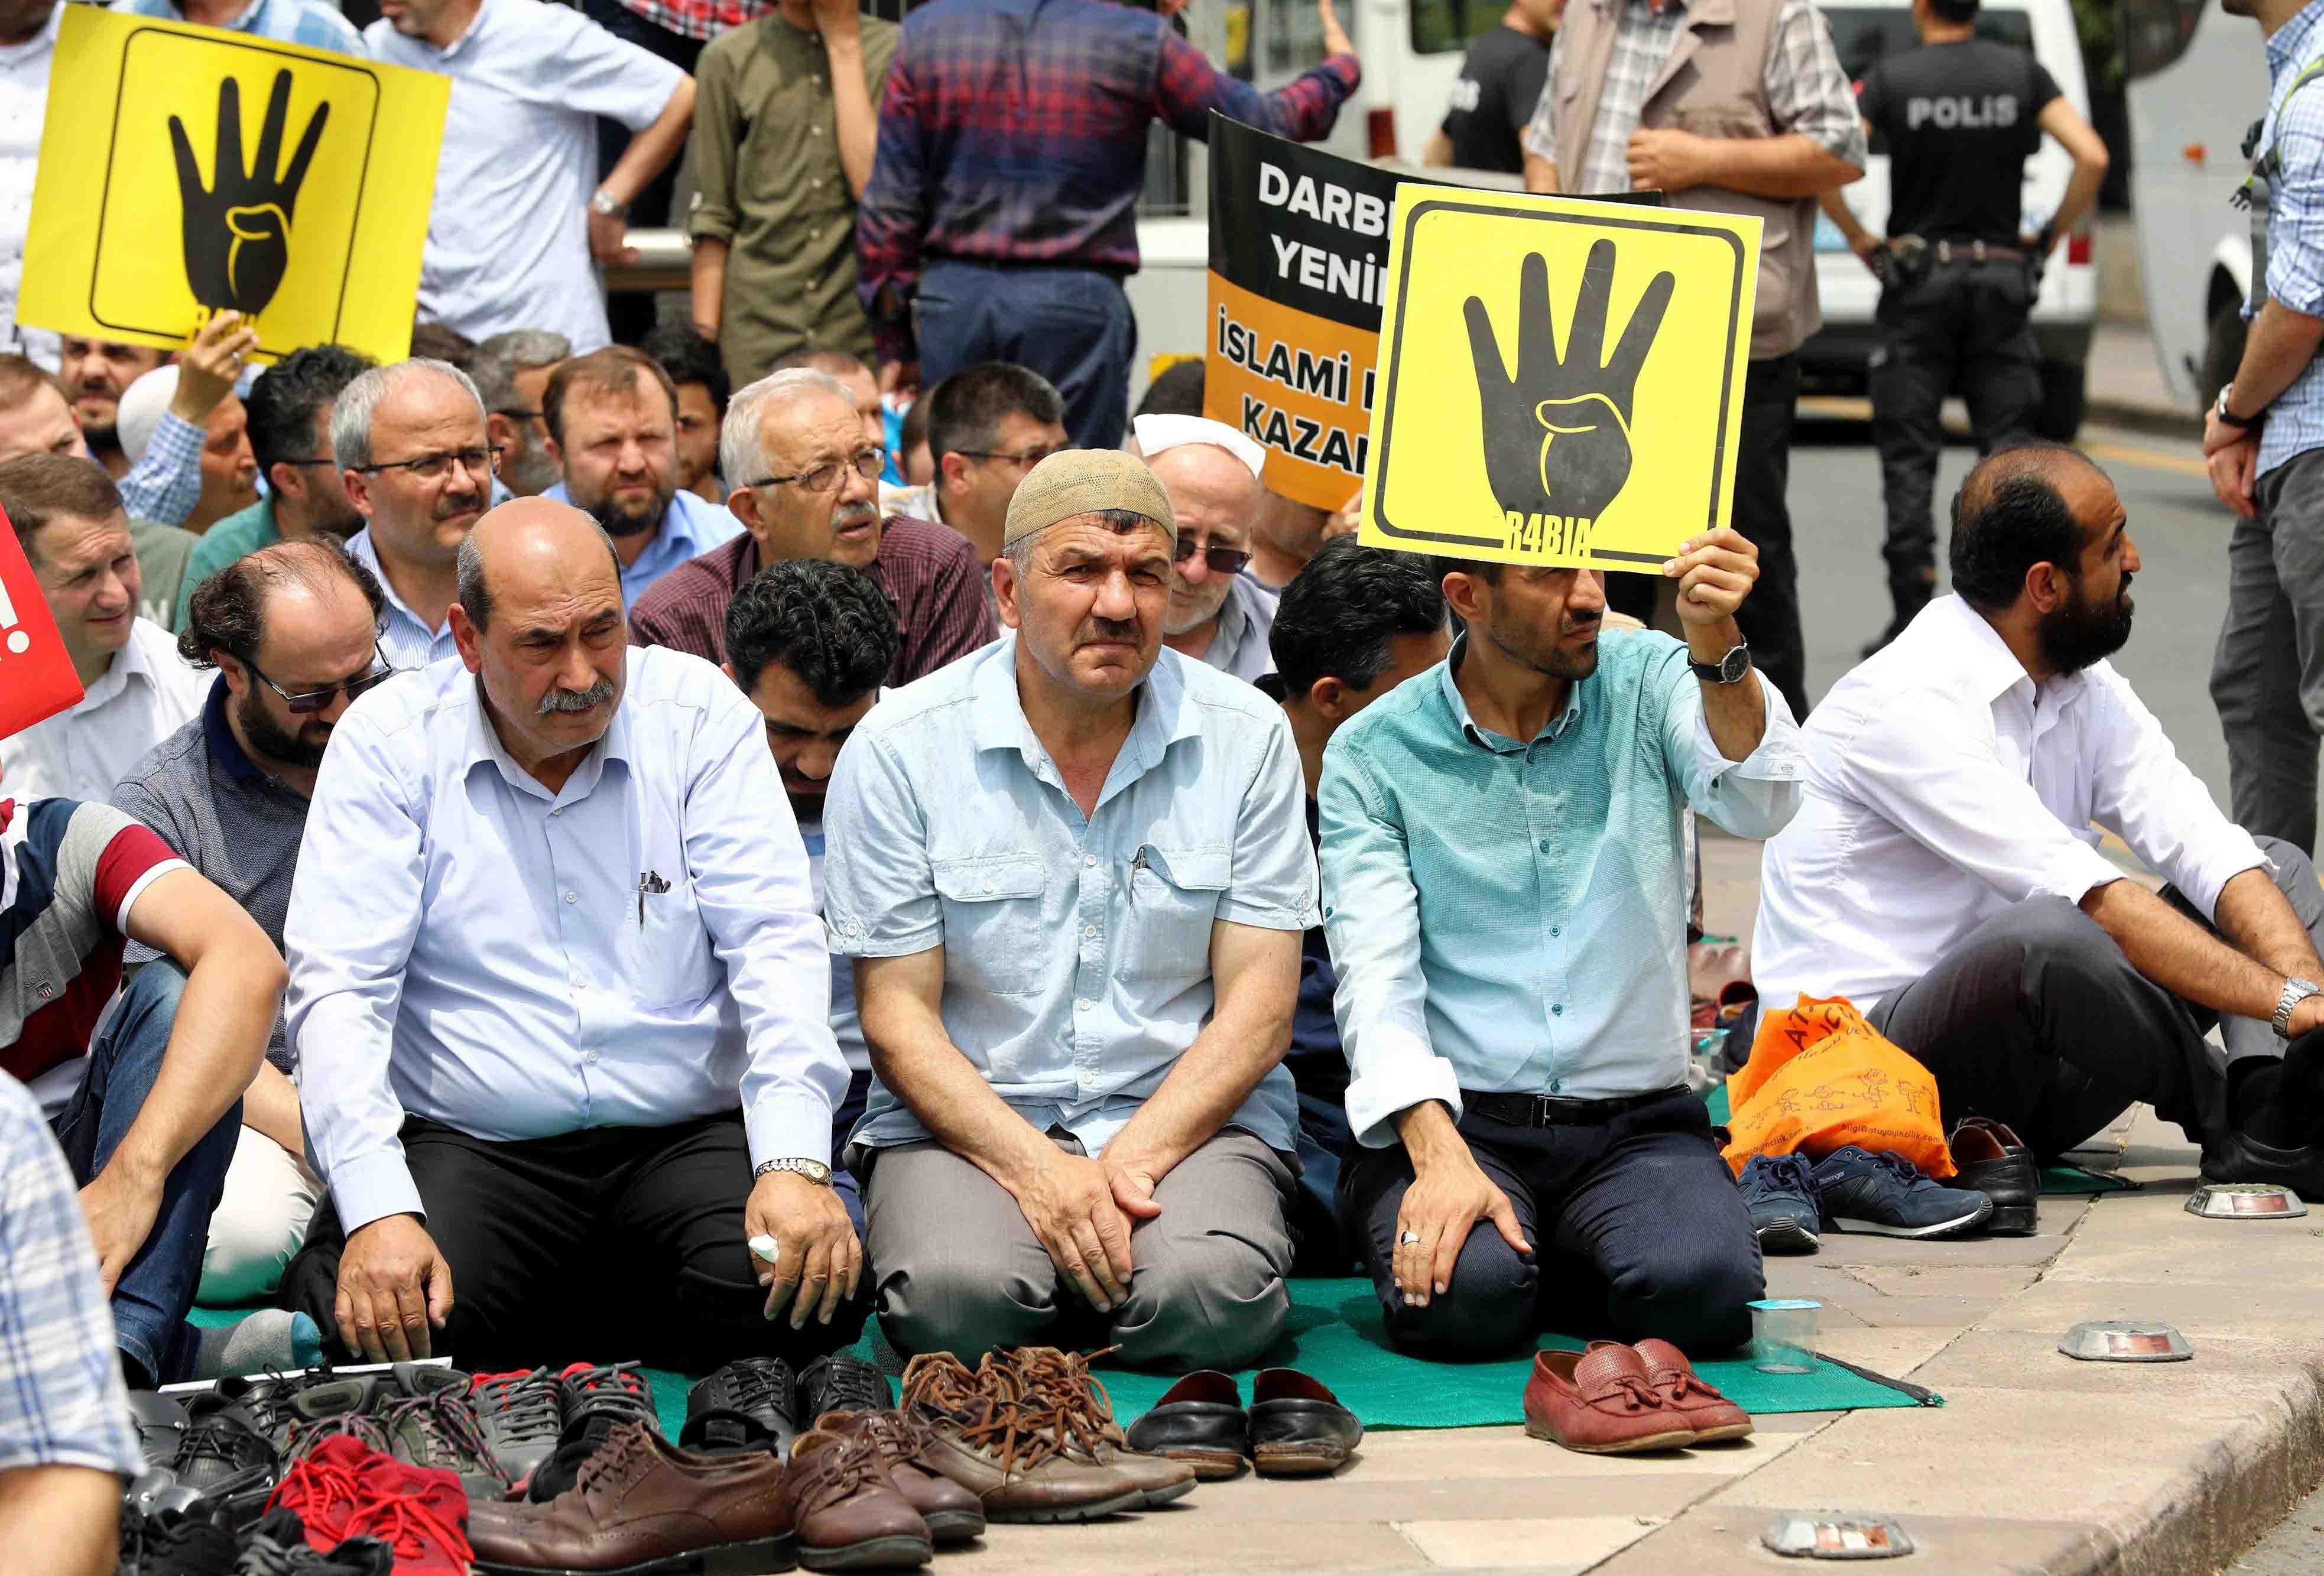 Members of the Ankara crowd chanted: "Murderer Sisi, martyr Mursi"